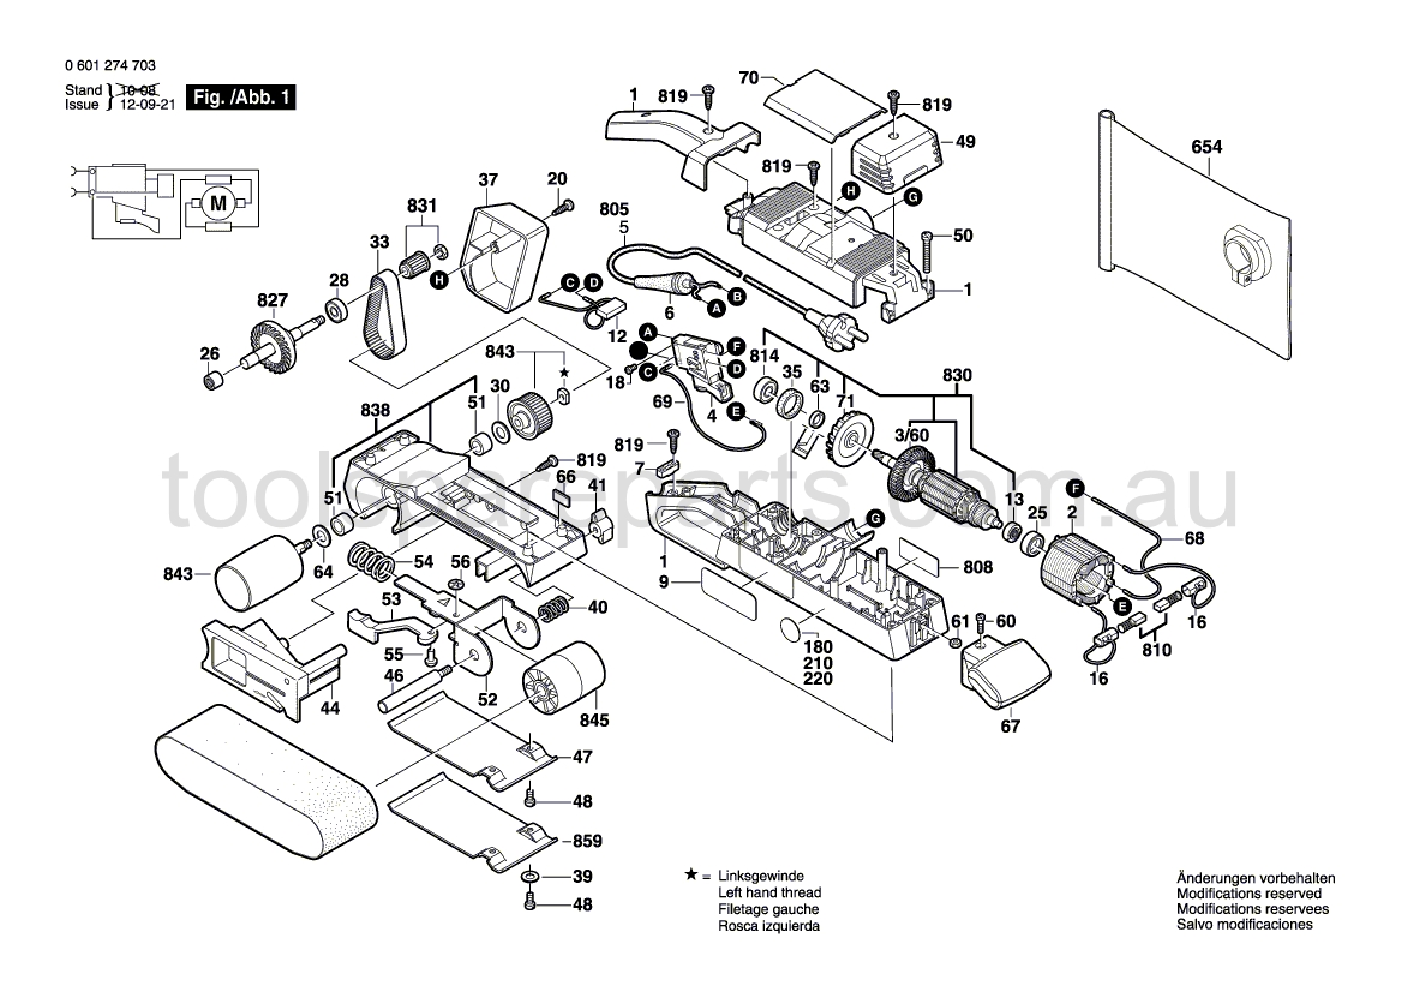 Bosch GBS 75 AE 0601274737  Diagram 1